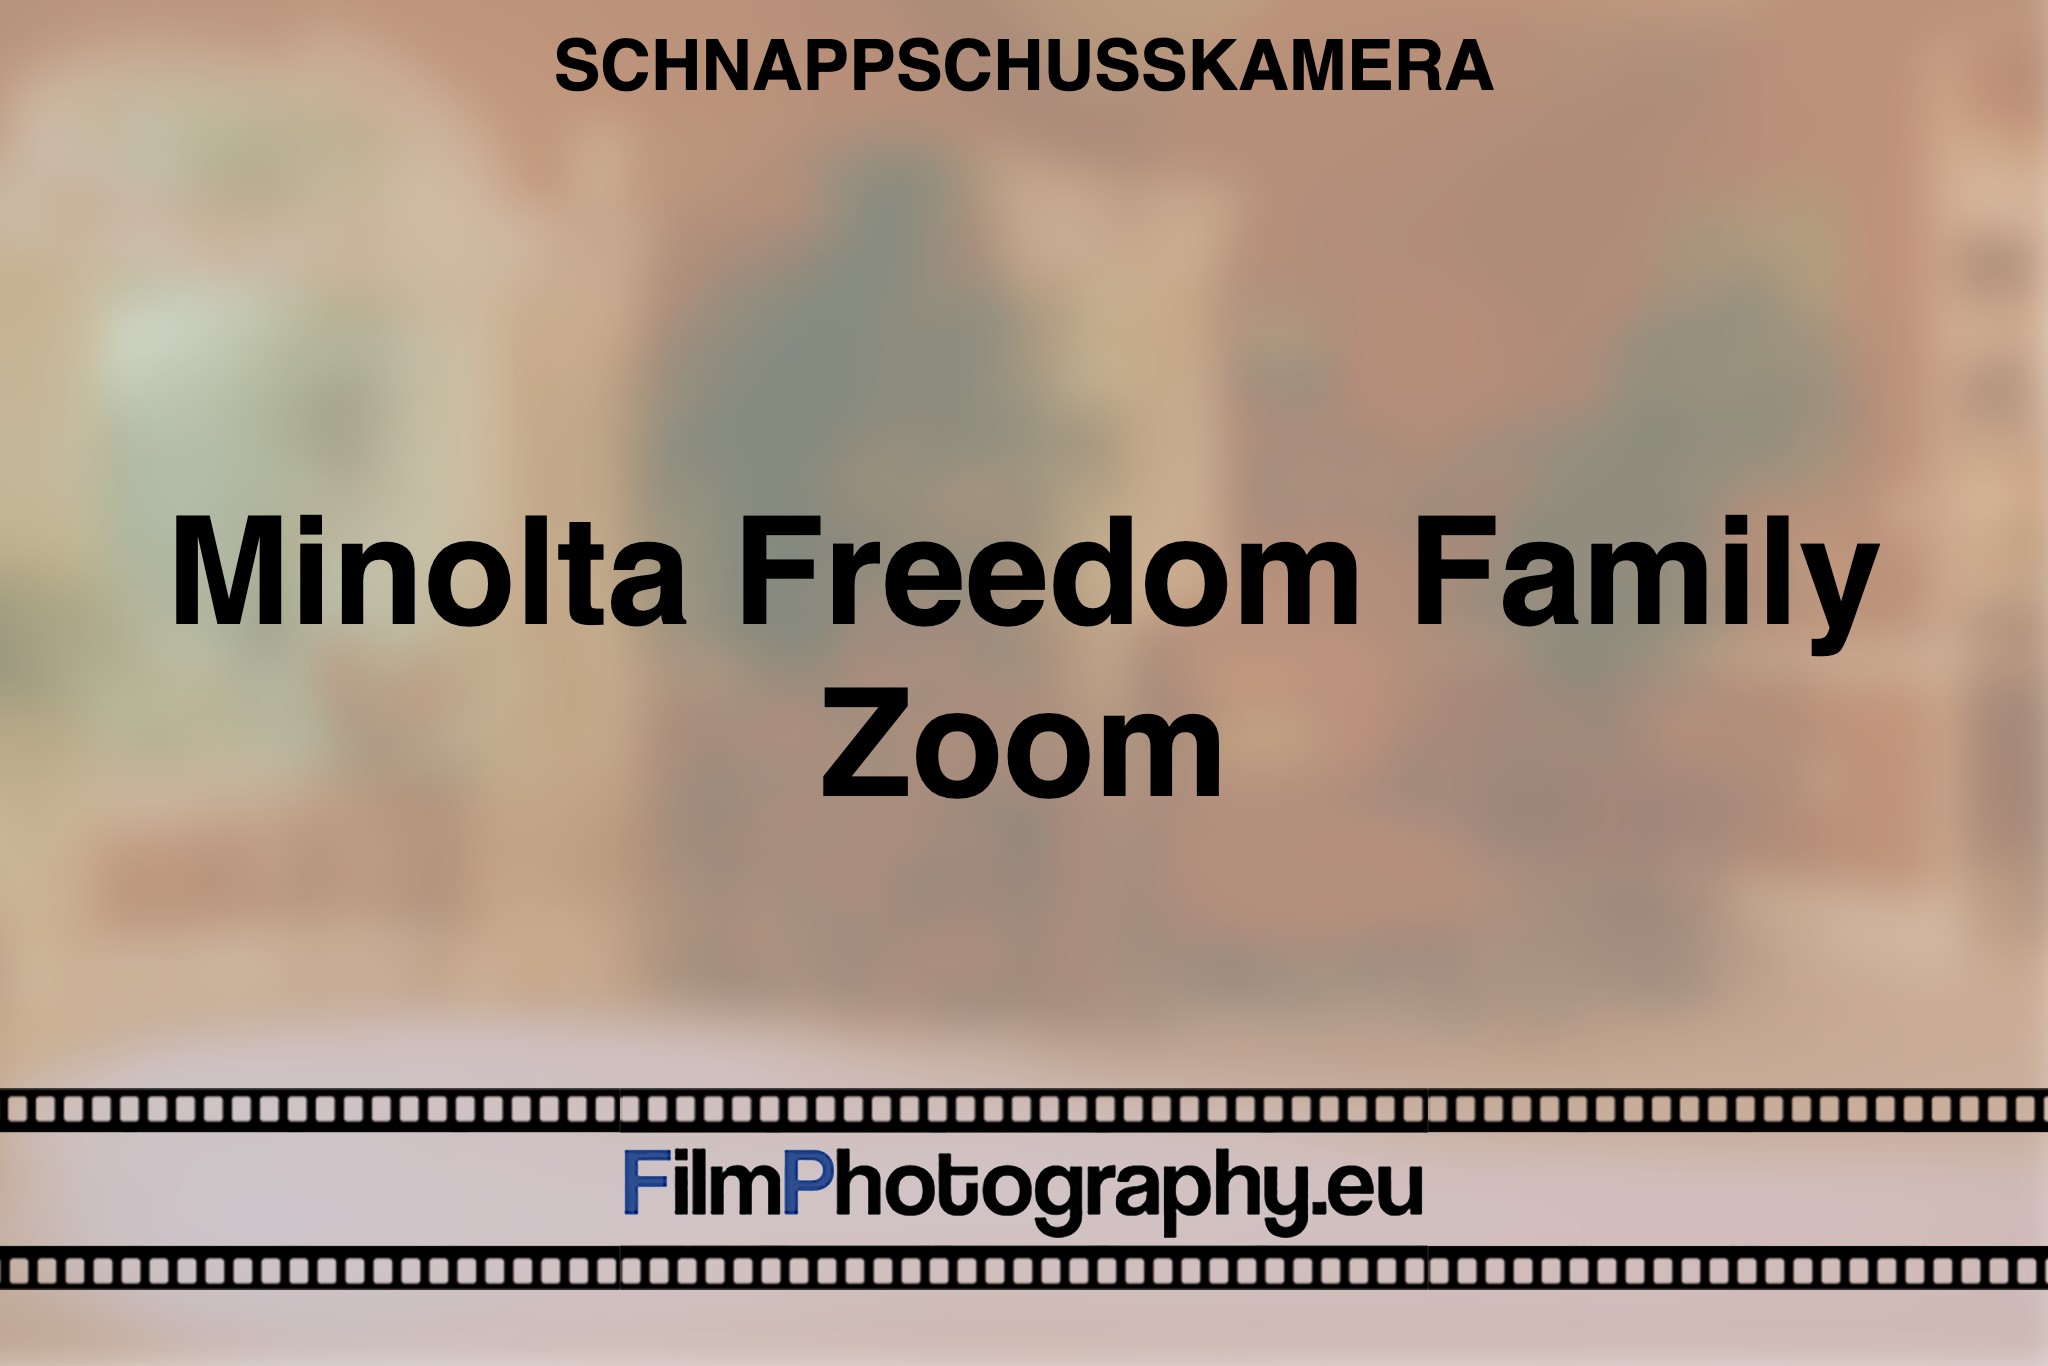 minolta-freedom-family-zoom-schnappschusskamera-bnv